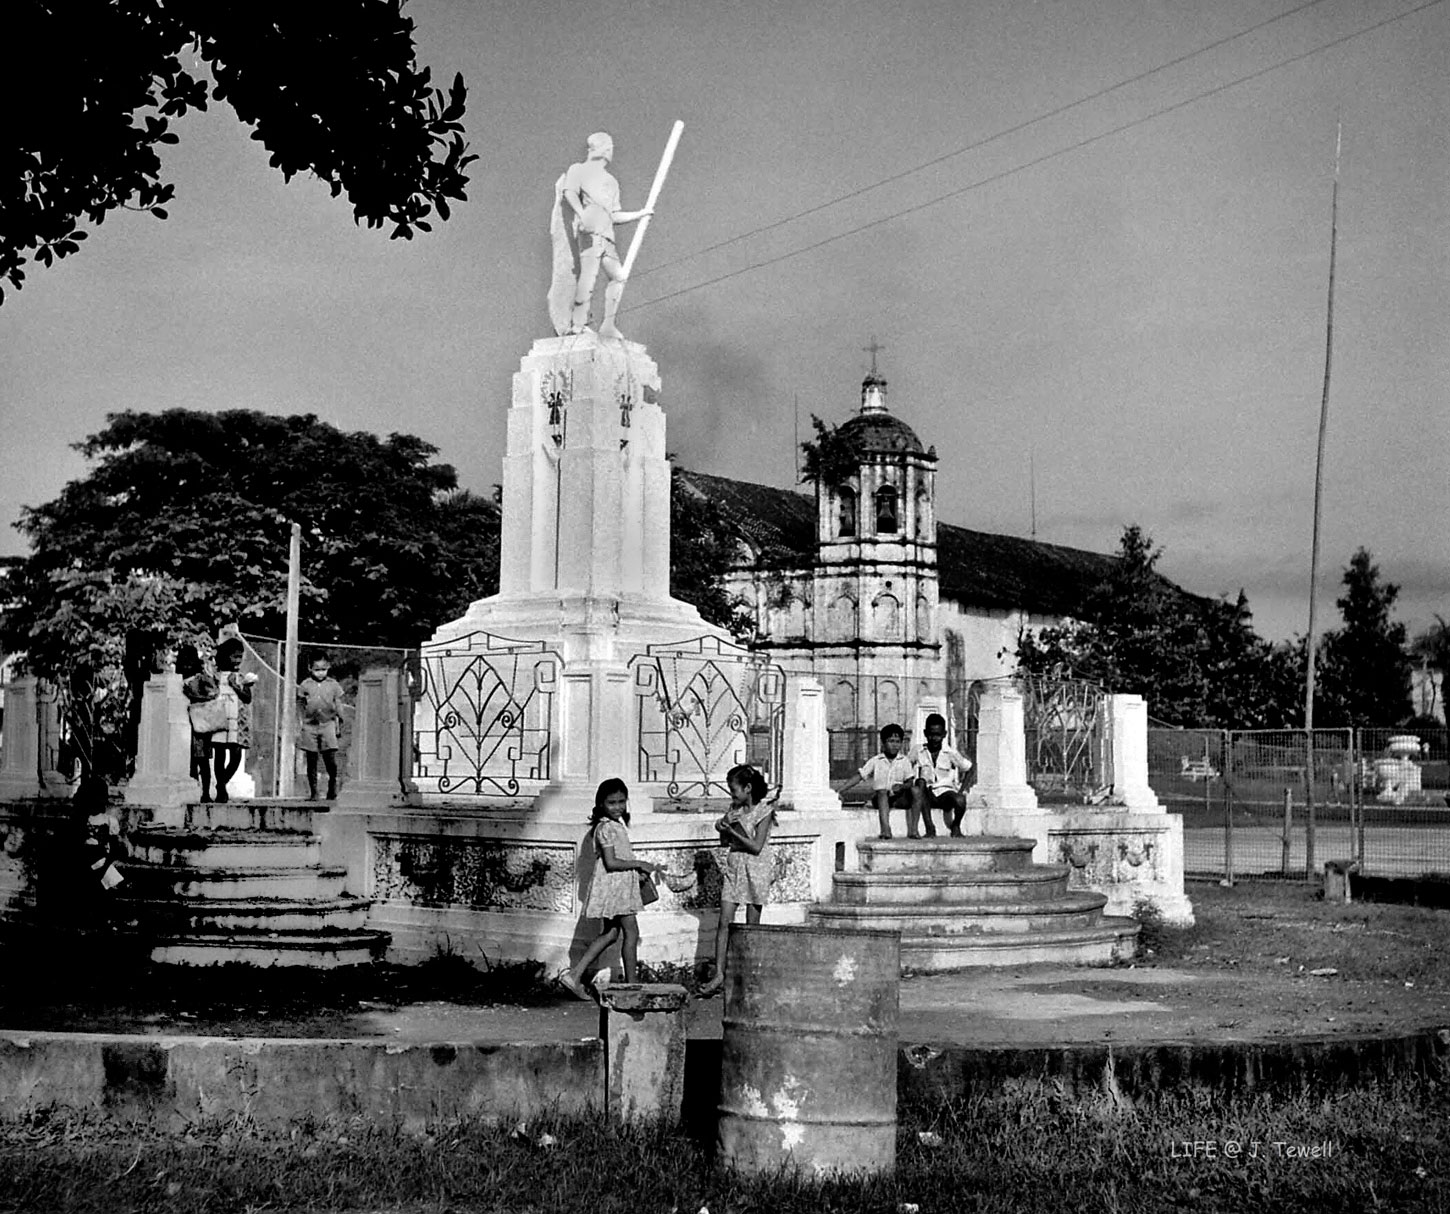 Lapulapu statue implicated in deaths of Opon mayors